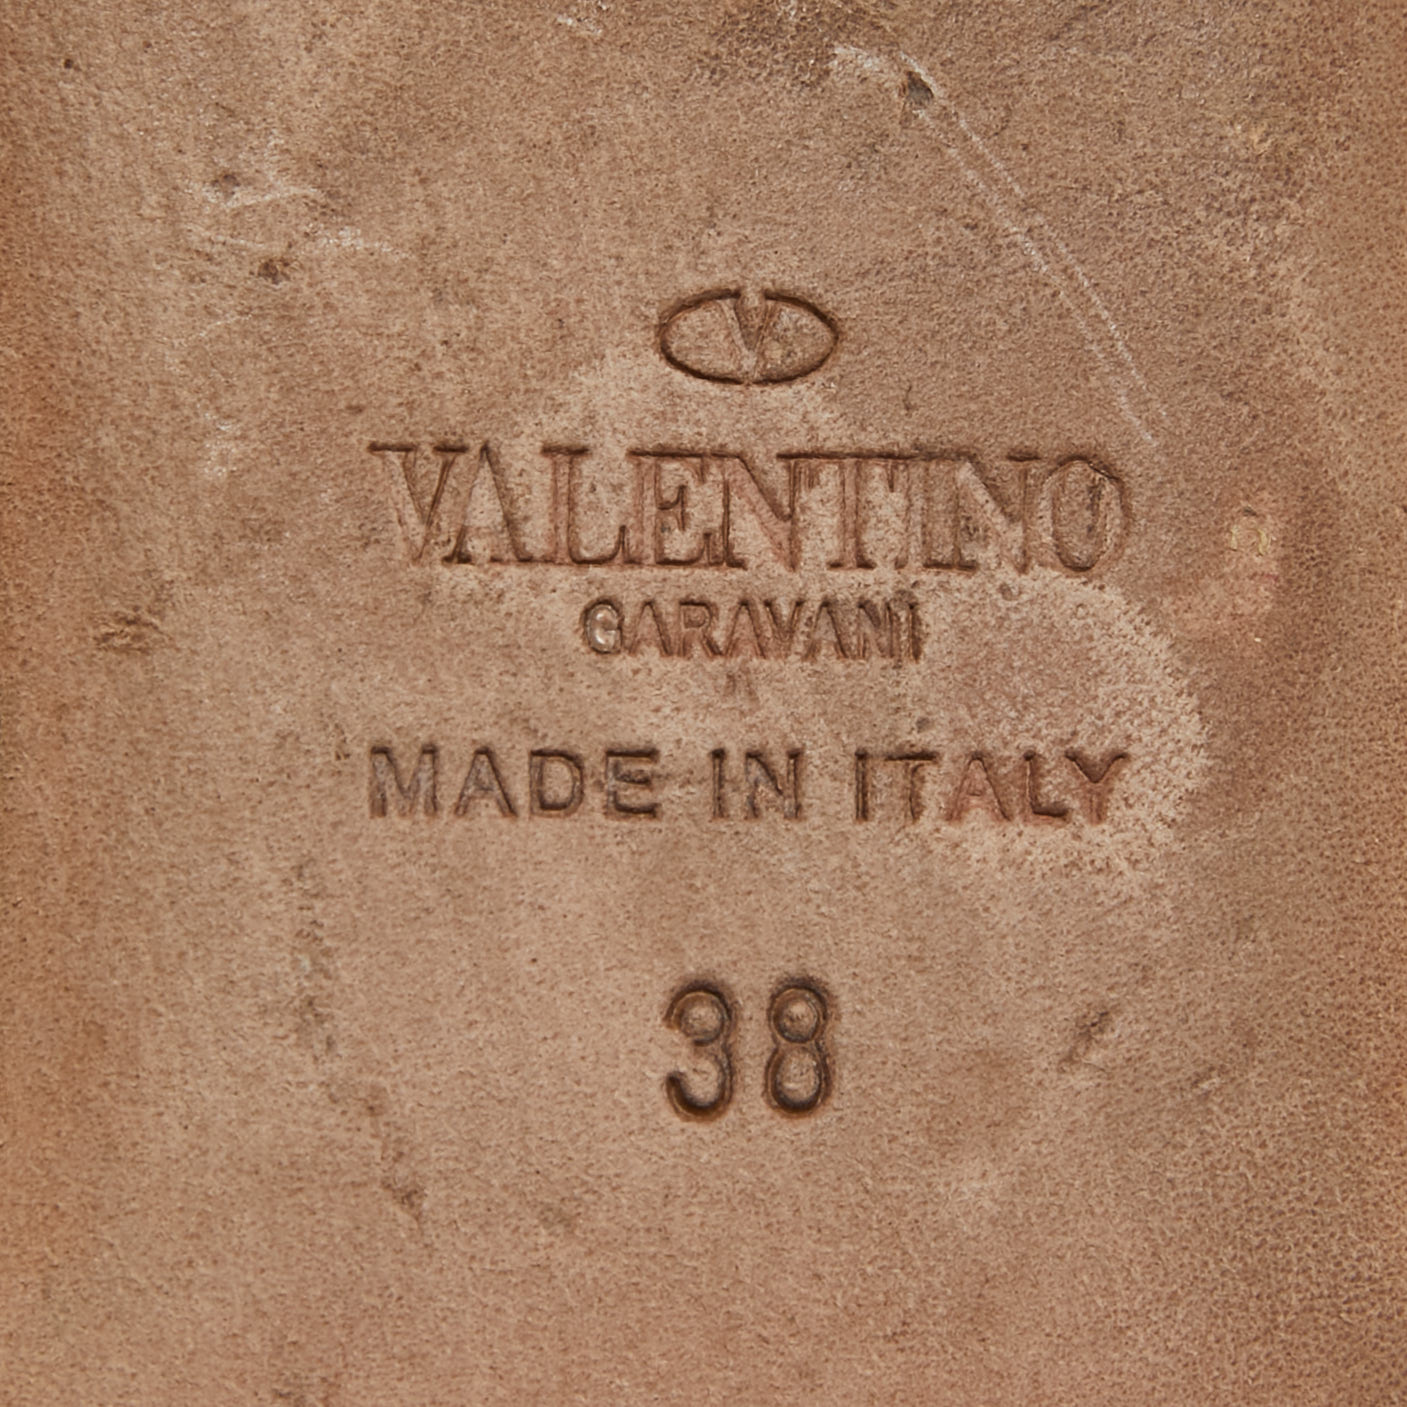 Valentino Metallic Leather Rockstud Ballet Flats Size 38